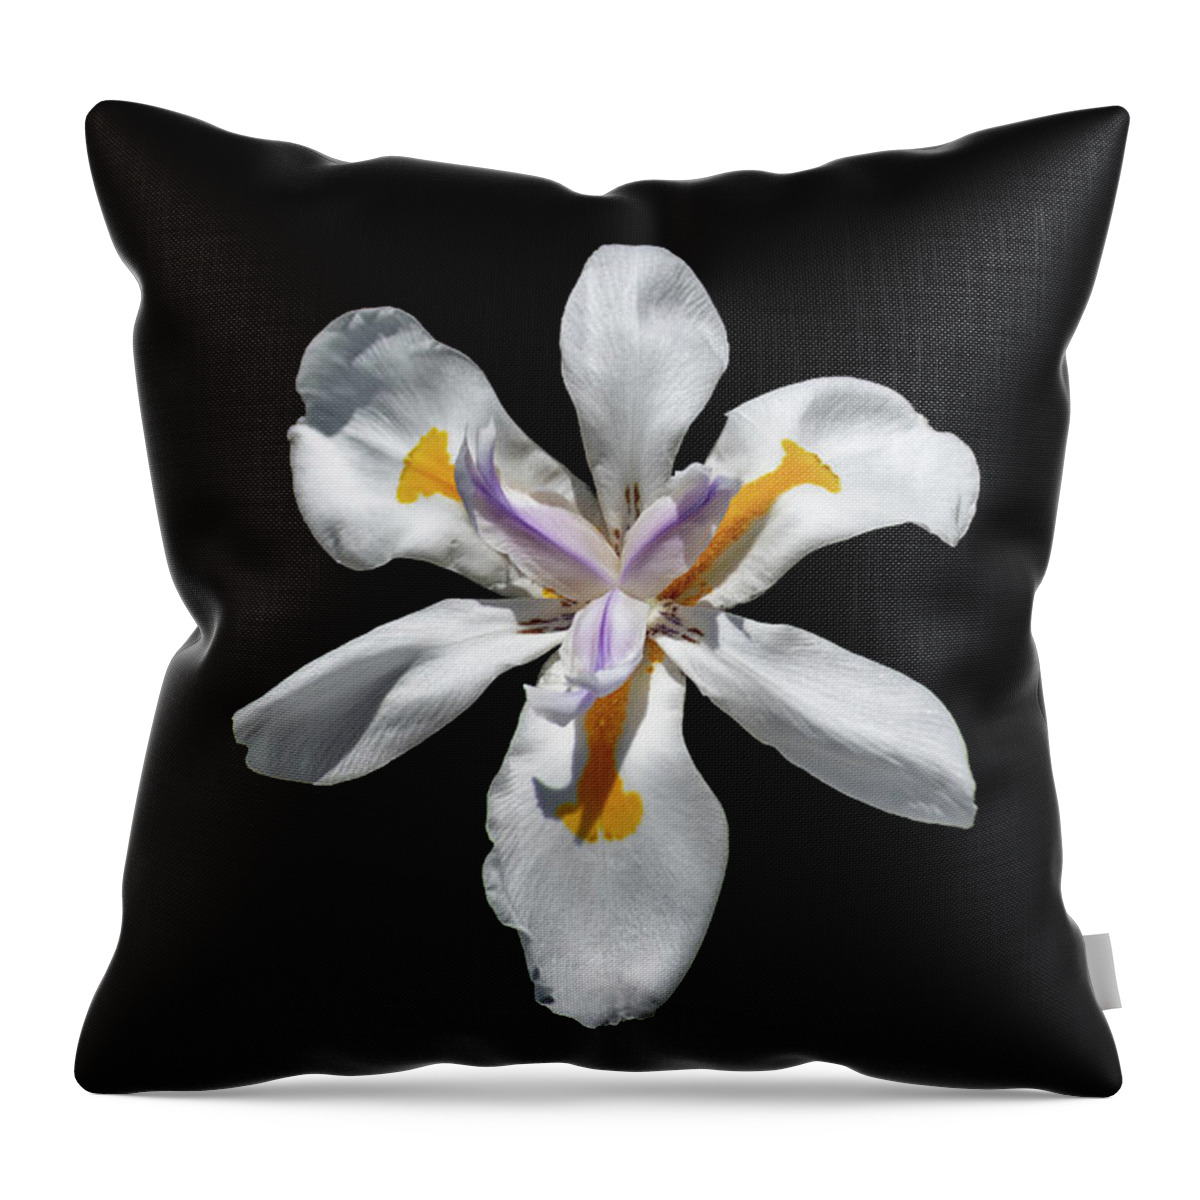 Iris Throw Pillow featuring the photograph Wild Iris on Black by Alison Frank